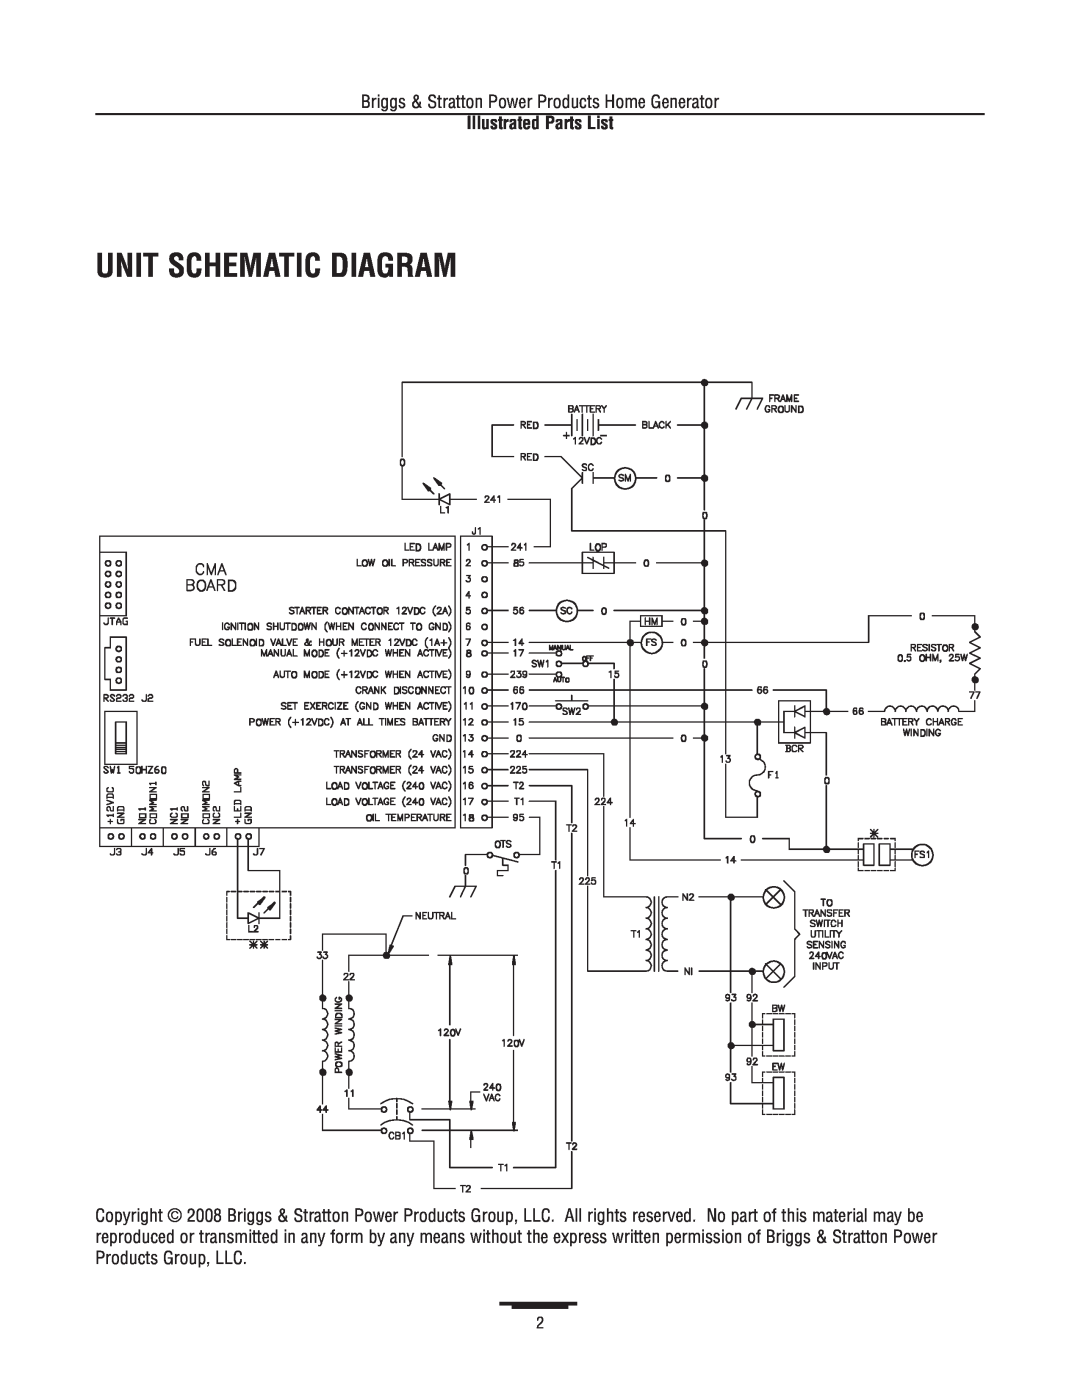 Briggs & Stratton 1815 manual Unit Schematic Diagram, Illustrated Parts List 